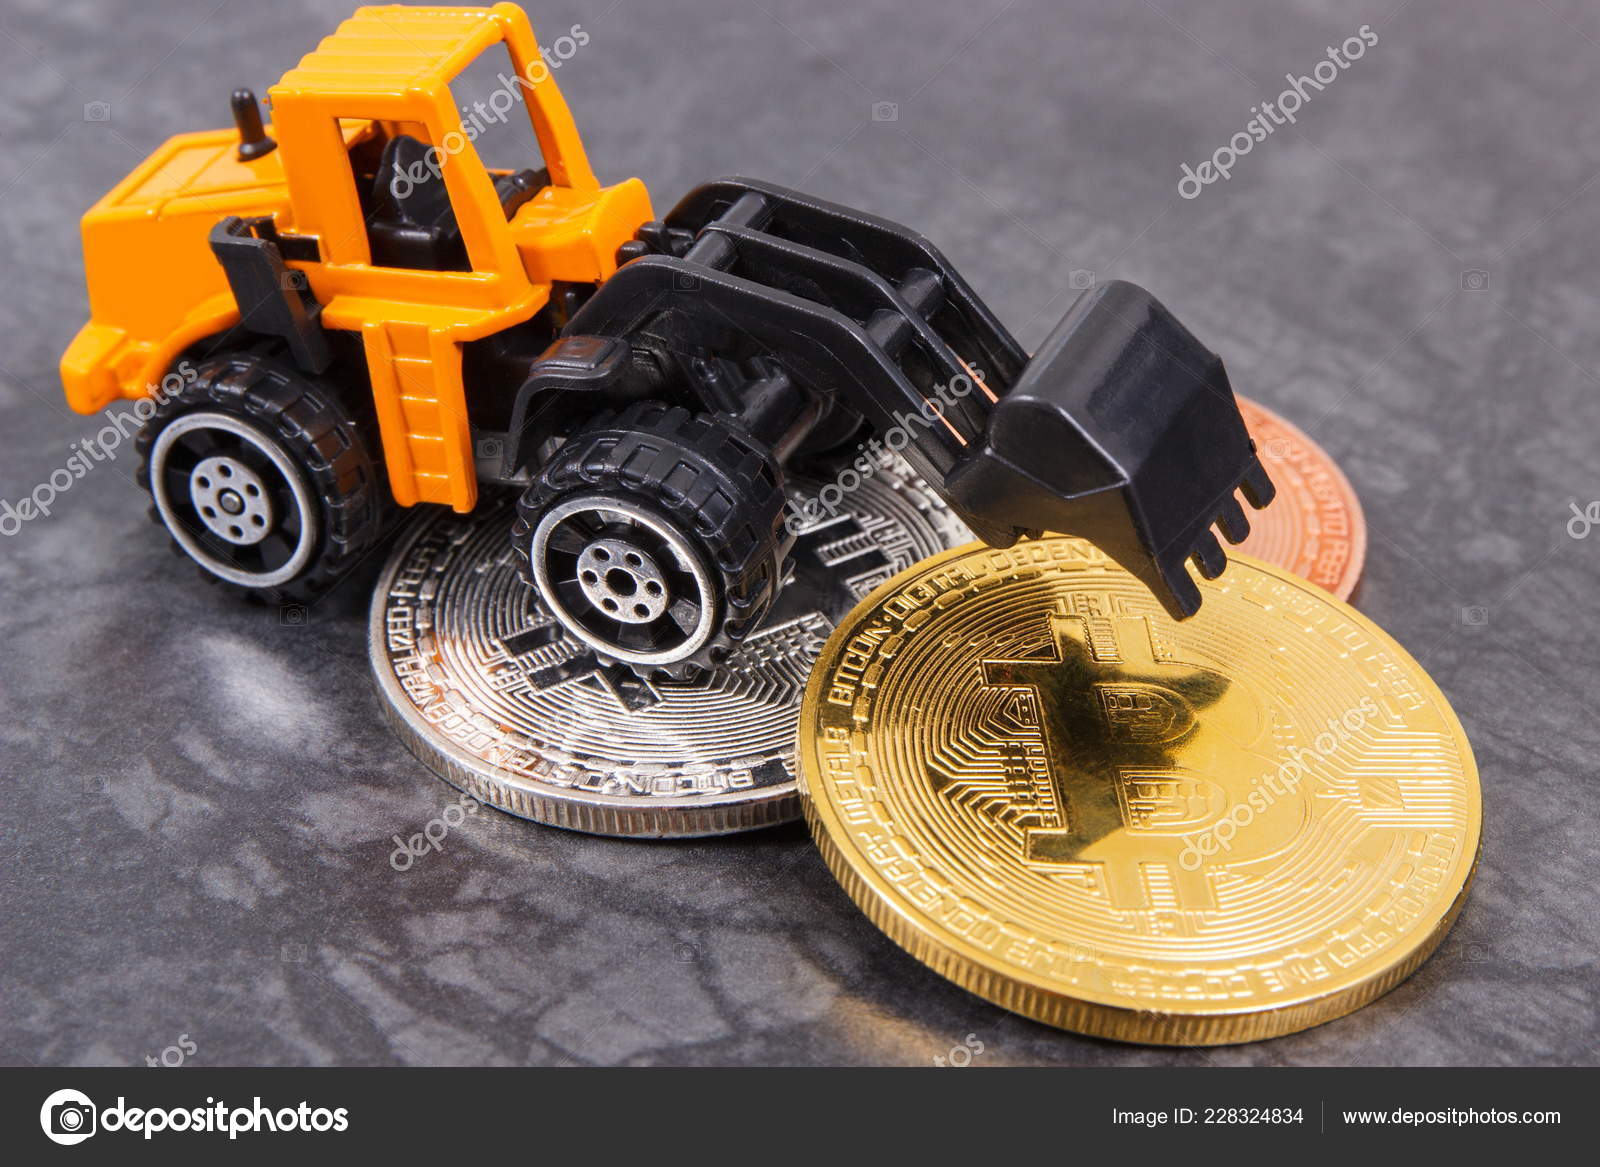 giuseppeverdimaddaloni.it: Asic Bitcoin Miner